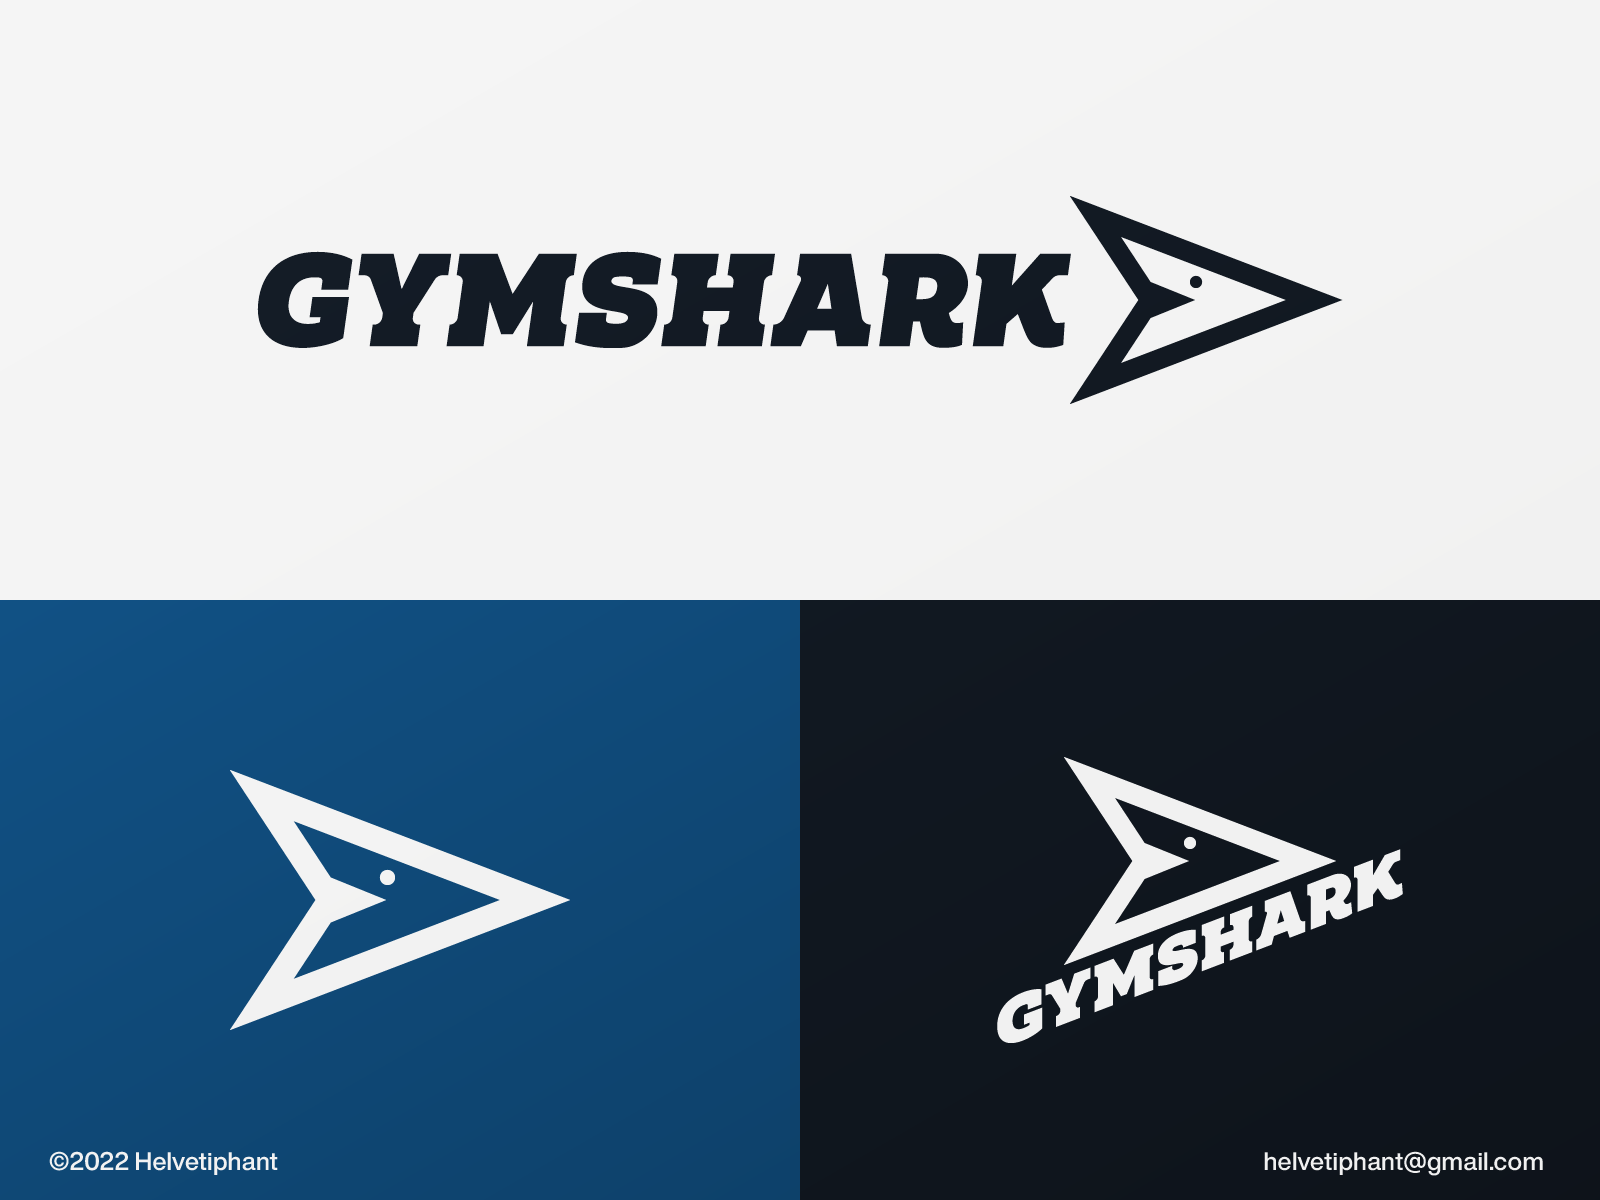 https://cdn.dribbble.com/users/721601/screenshots/19894162/gymshark_-_logo_concept_by_helvetiphant.png